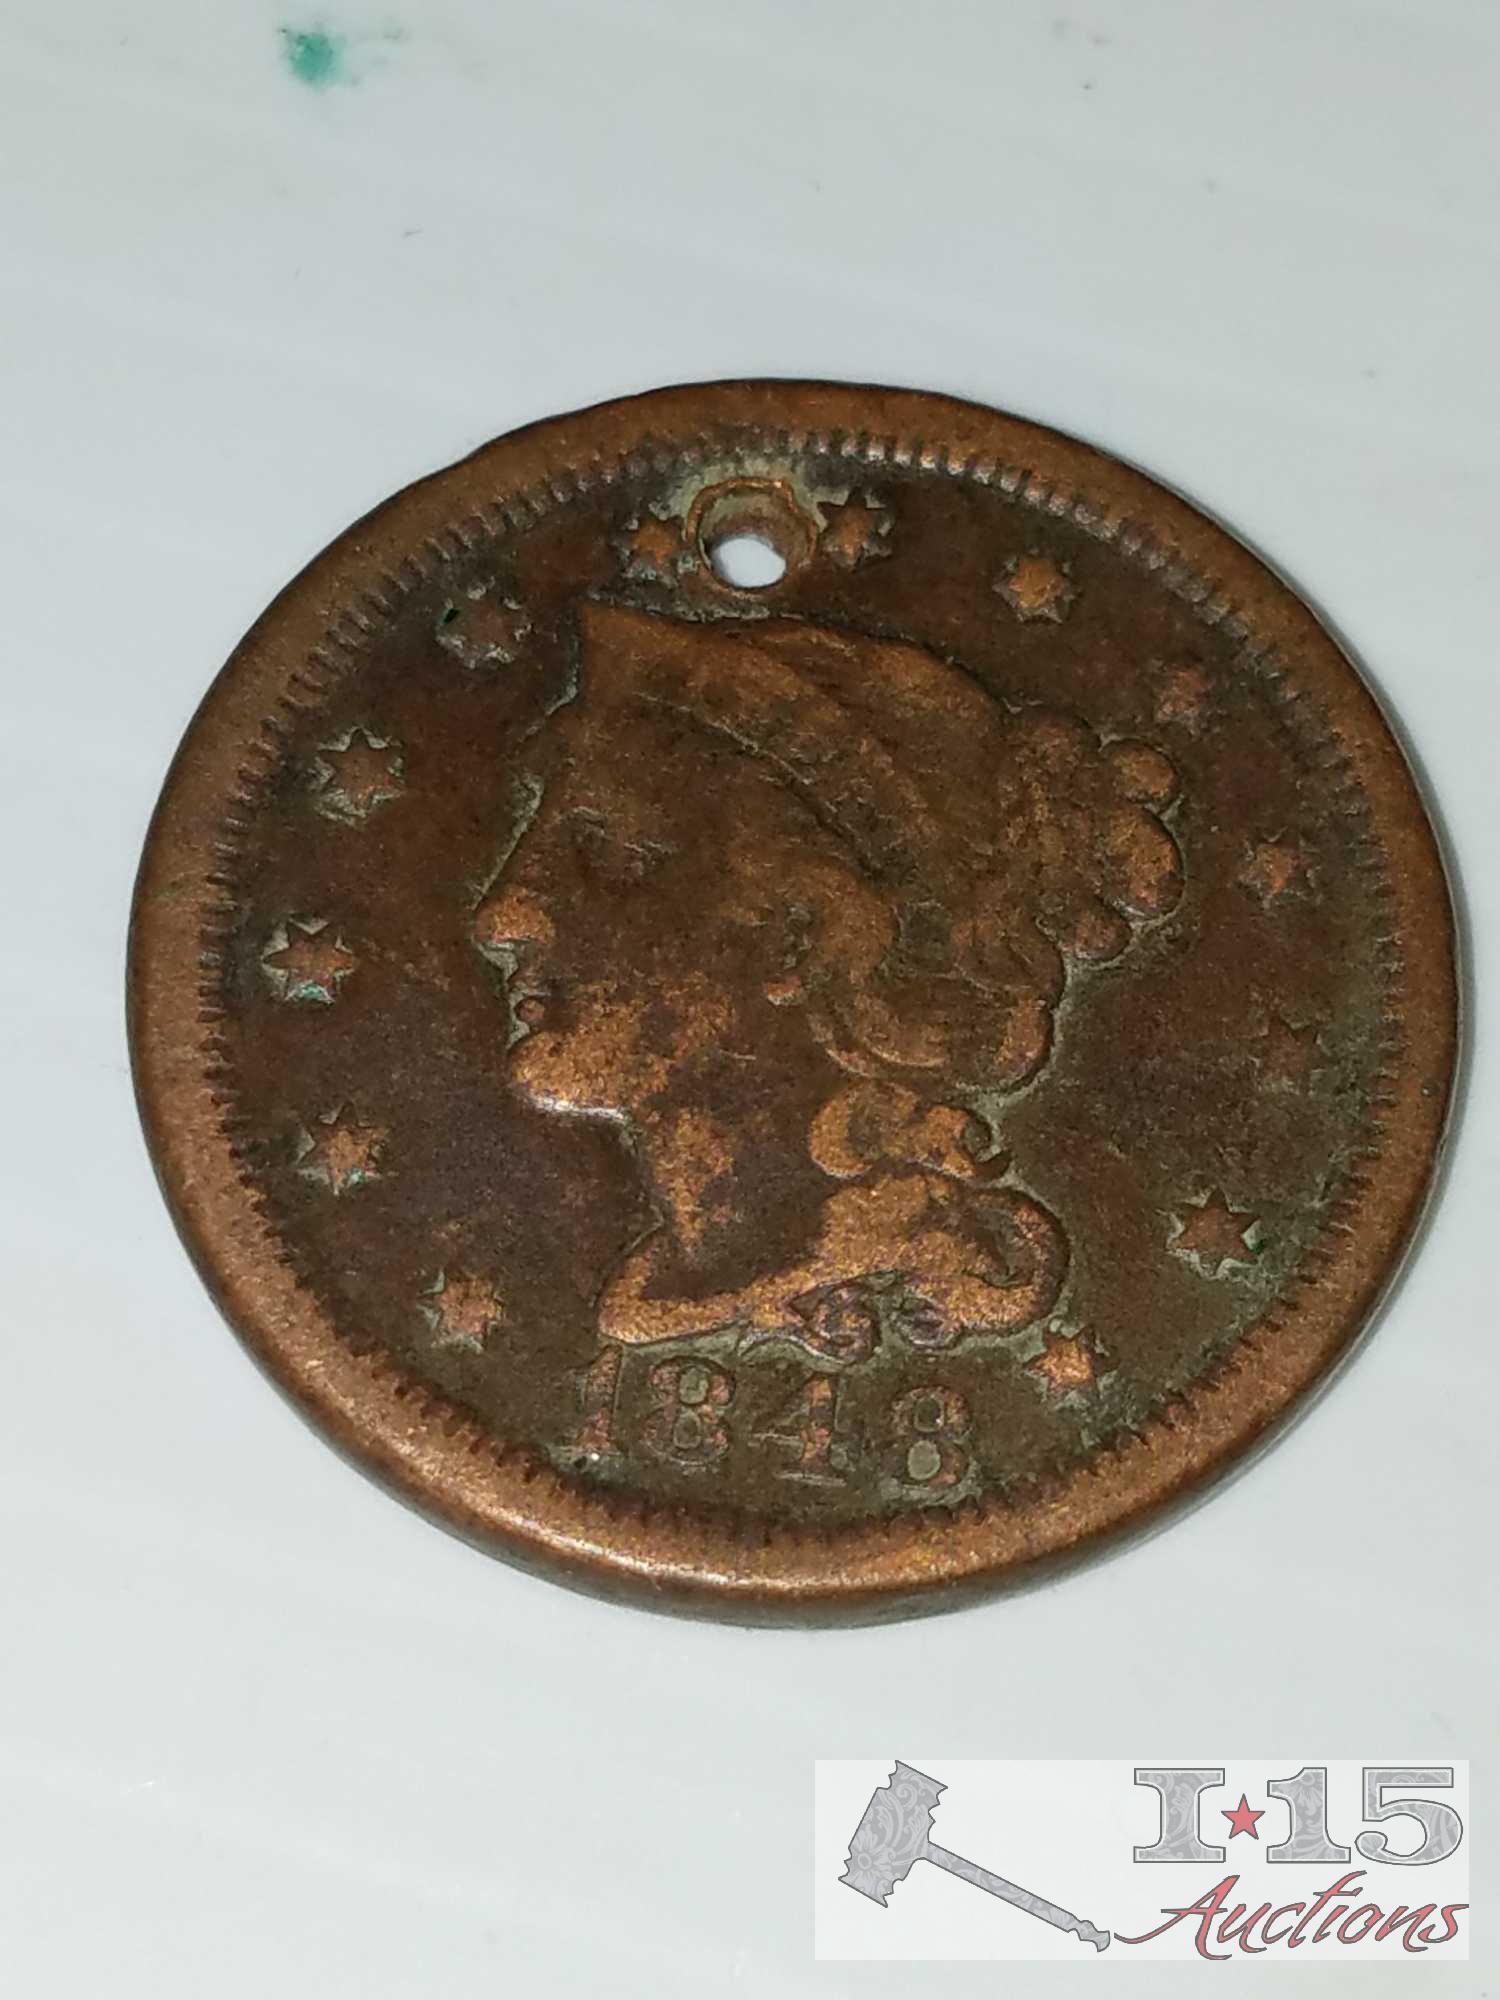 Eight (8) Coronet Liberty Head Large U. S. Cents: 1819, 1826, 1827, 1838, 1847, quantity 2 - 1848